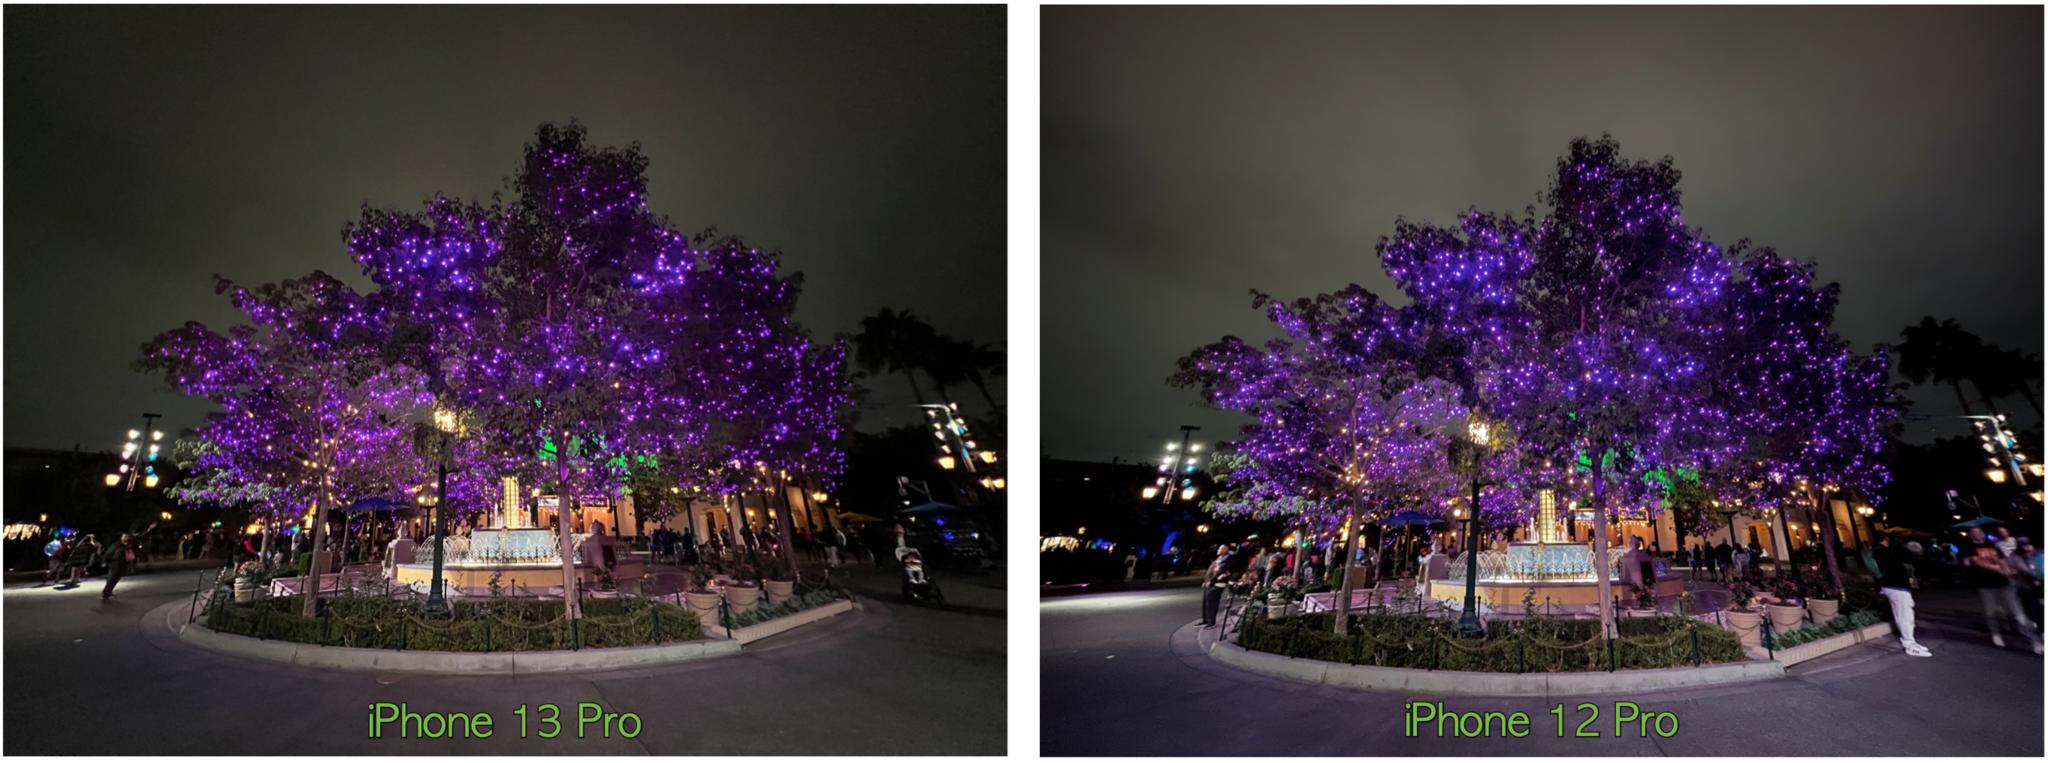 Dca Purple Lights Trees Iphone Comparison